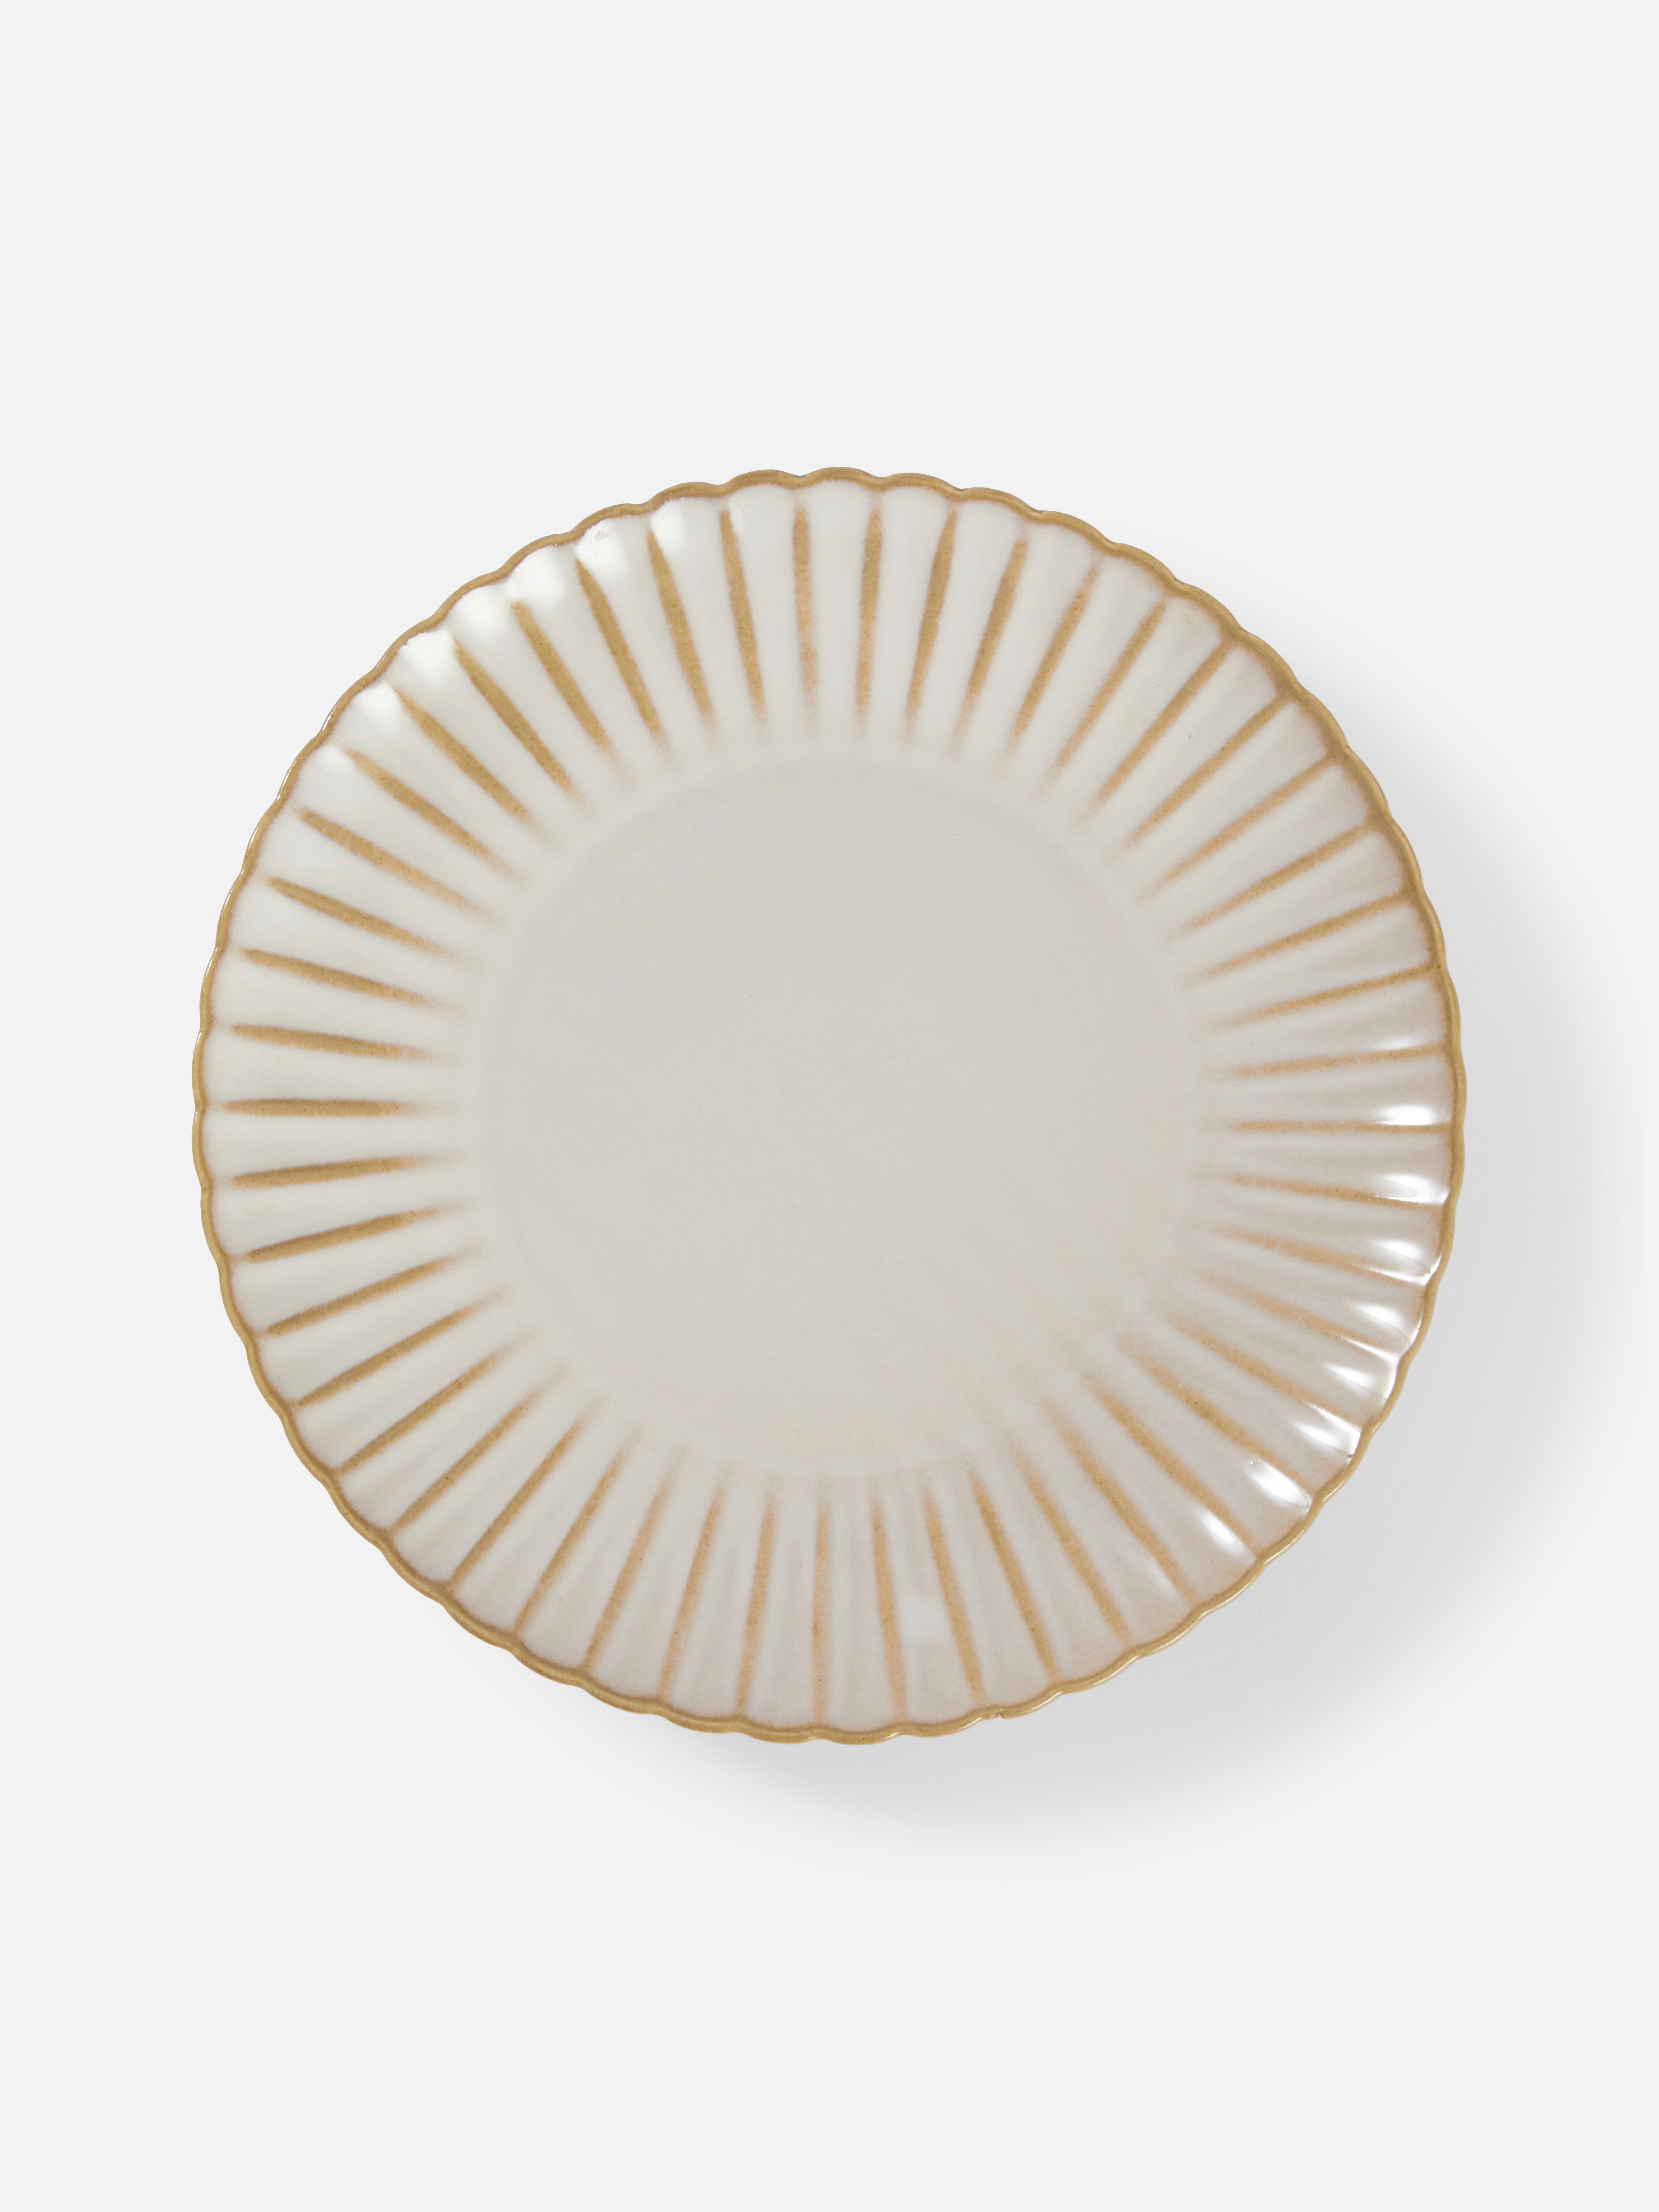 Scalloped Edge Ceramic Side Plate